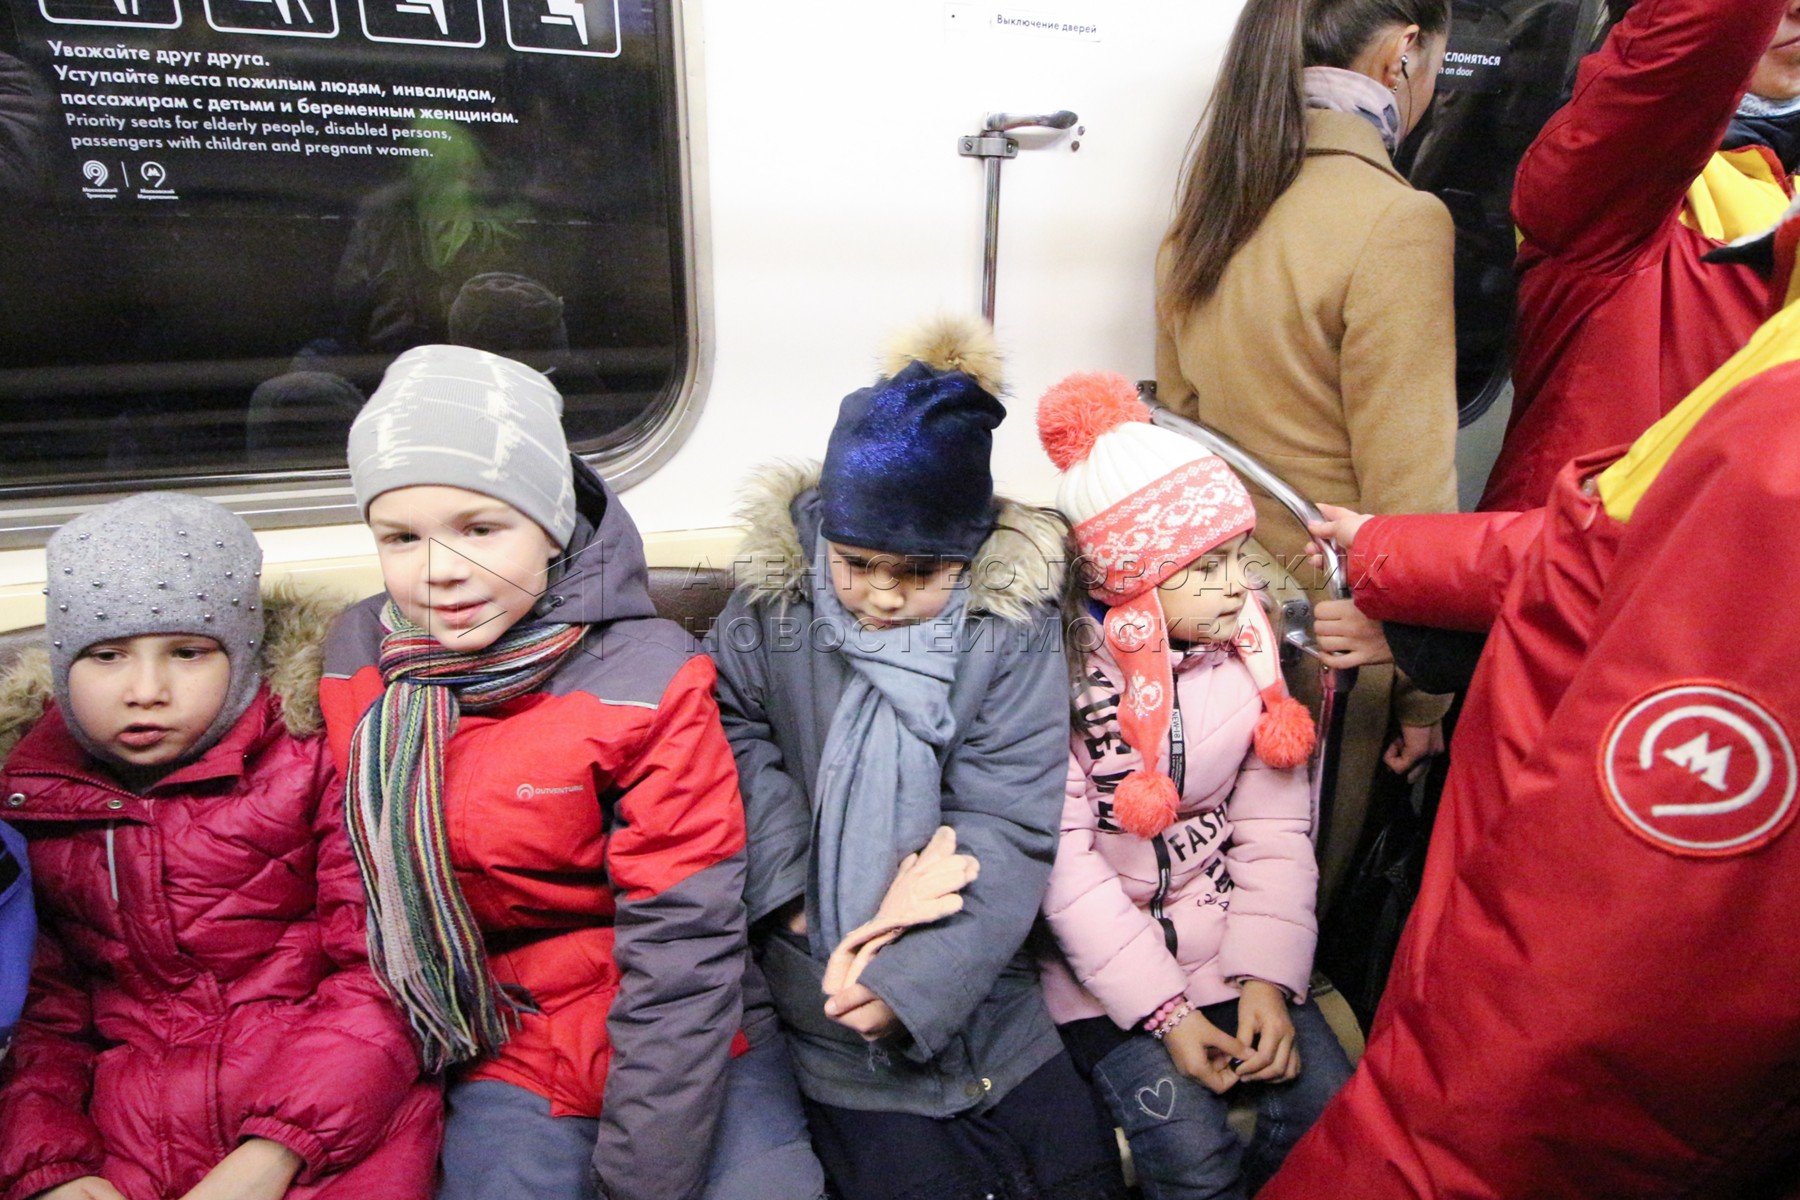 Метрополитен дети. Метро для детей. Дети в метро Москва. Школьники в метро. Ребенок один в метро.